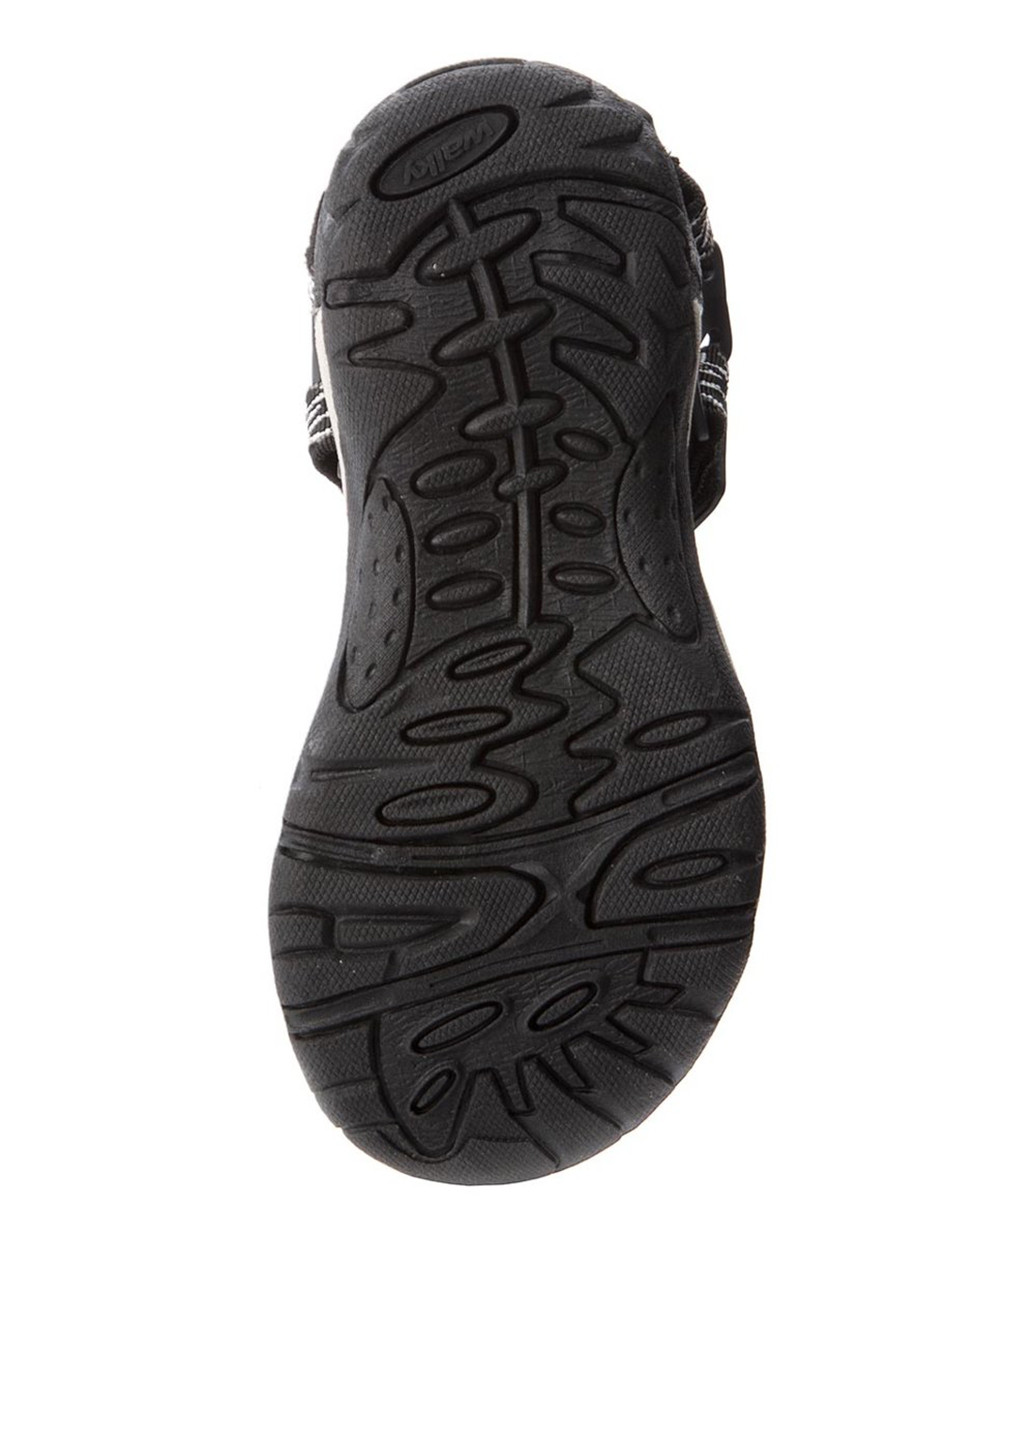 Черные кэжуал сандалі cp69-644 Walky на липучке